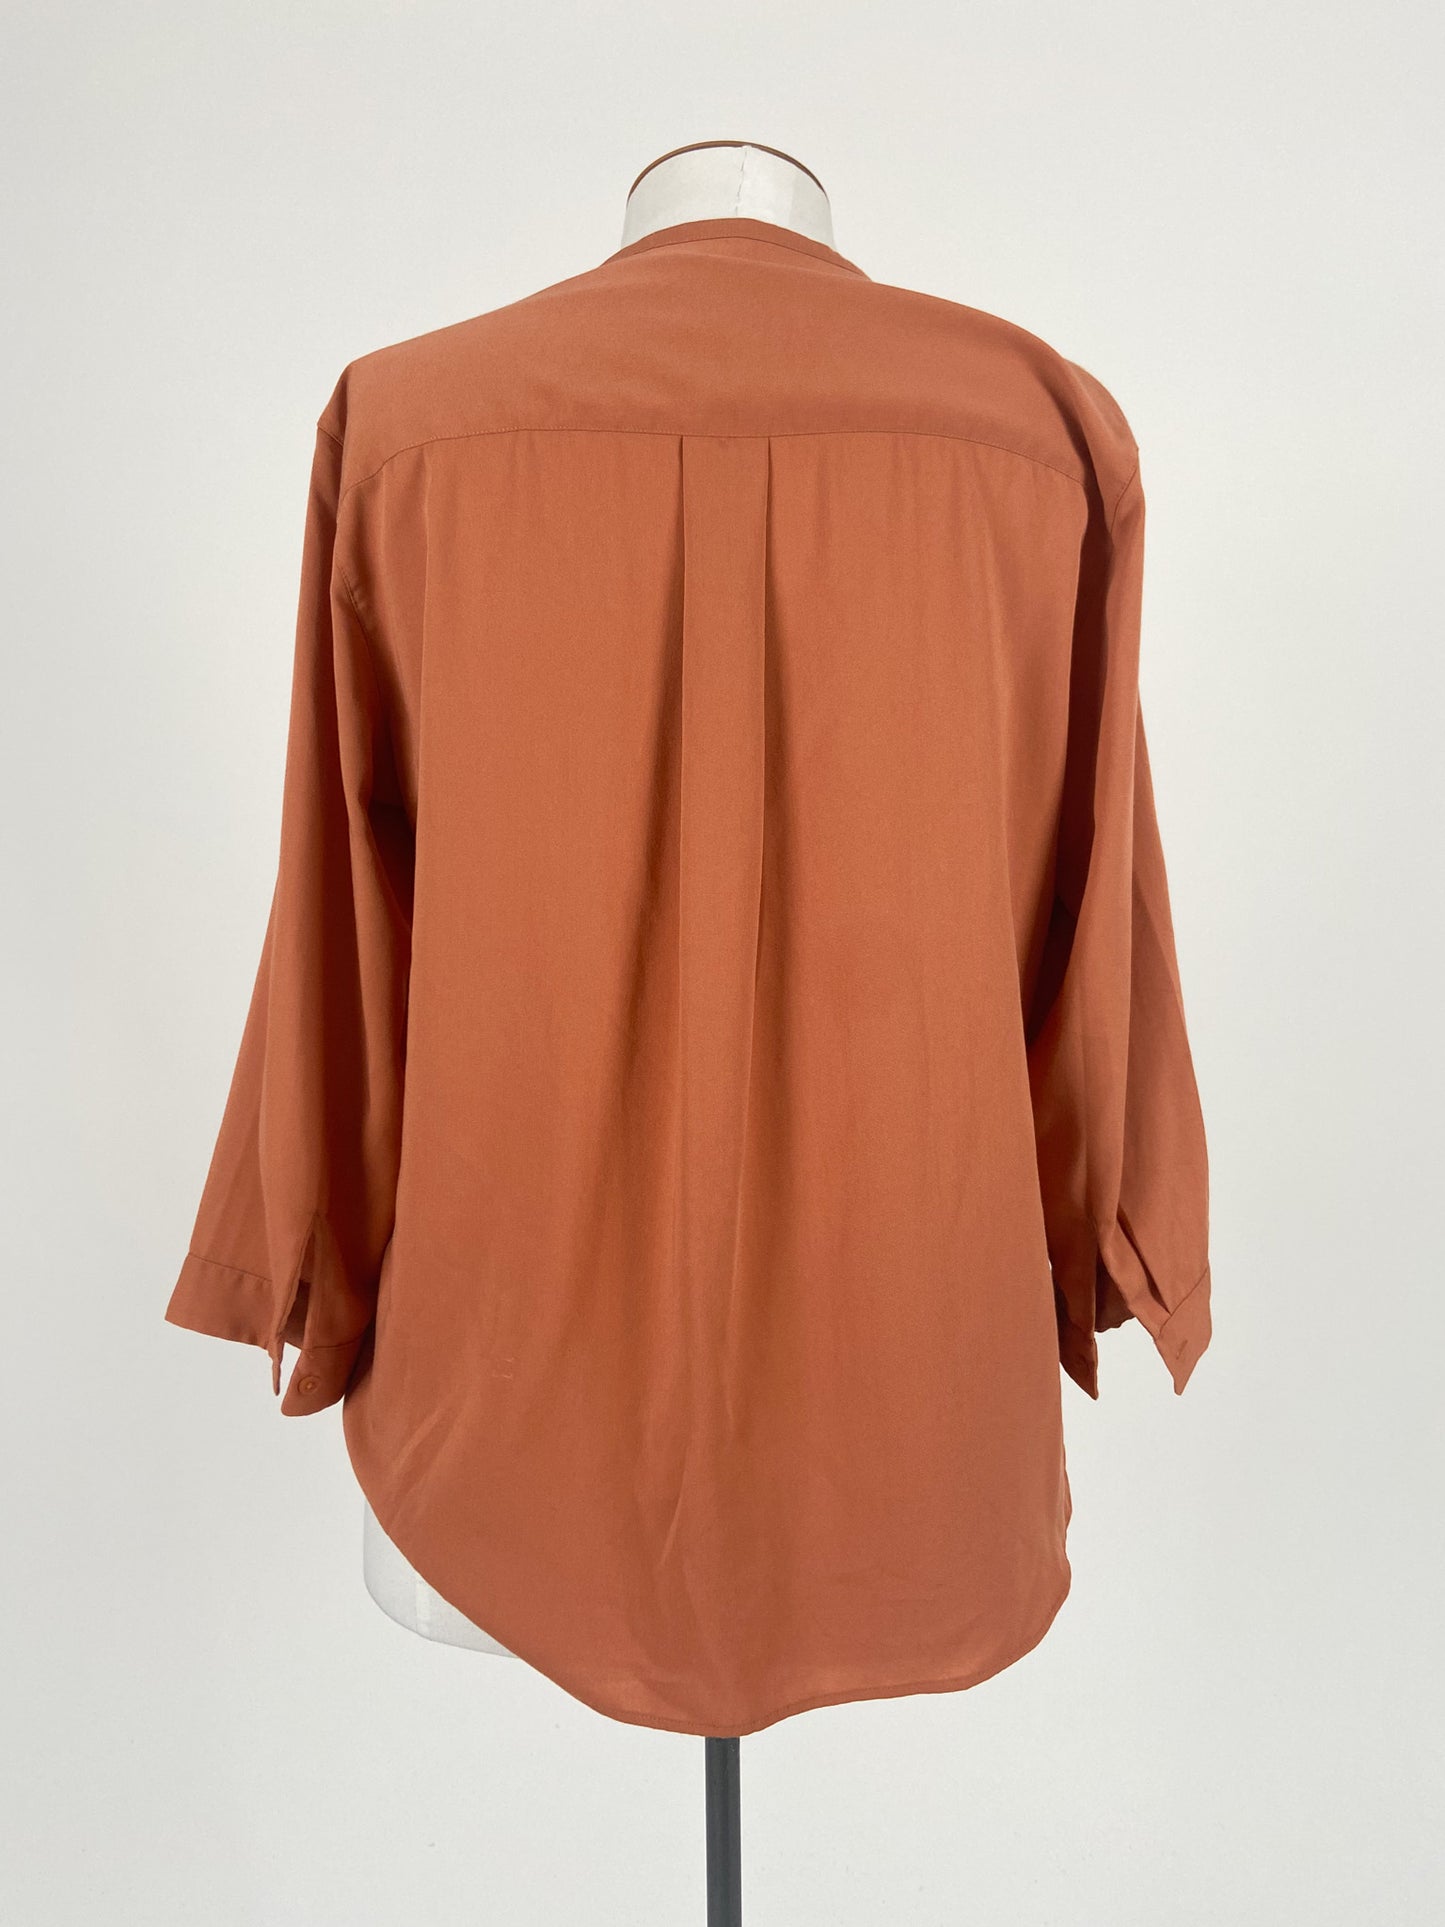 Uniqlo | Orange Casual/Workwear Top | Size M